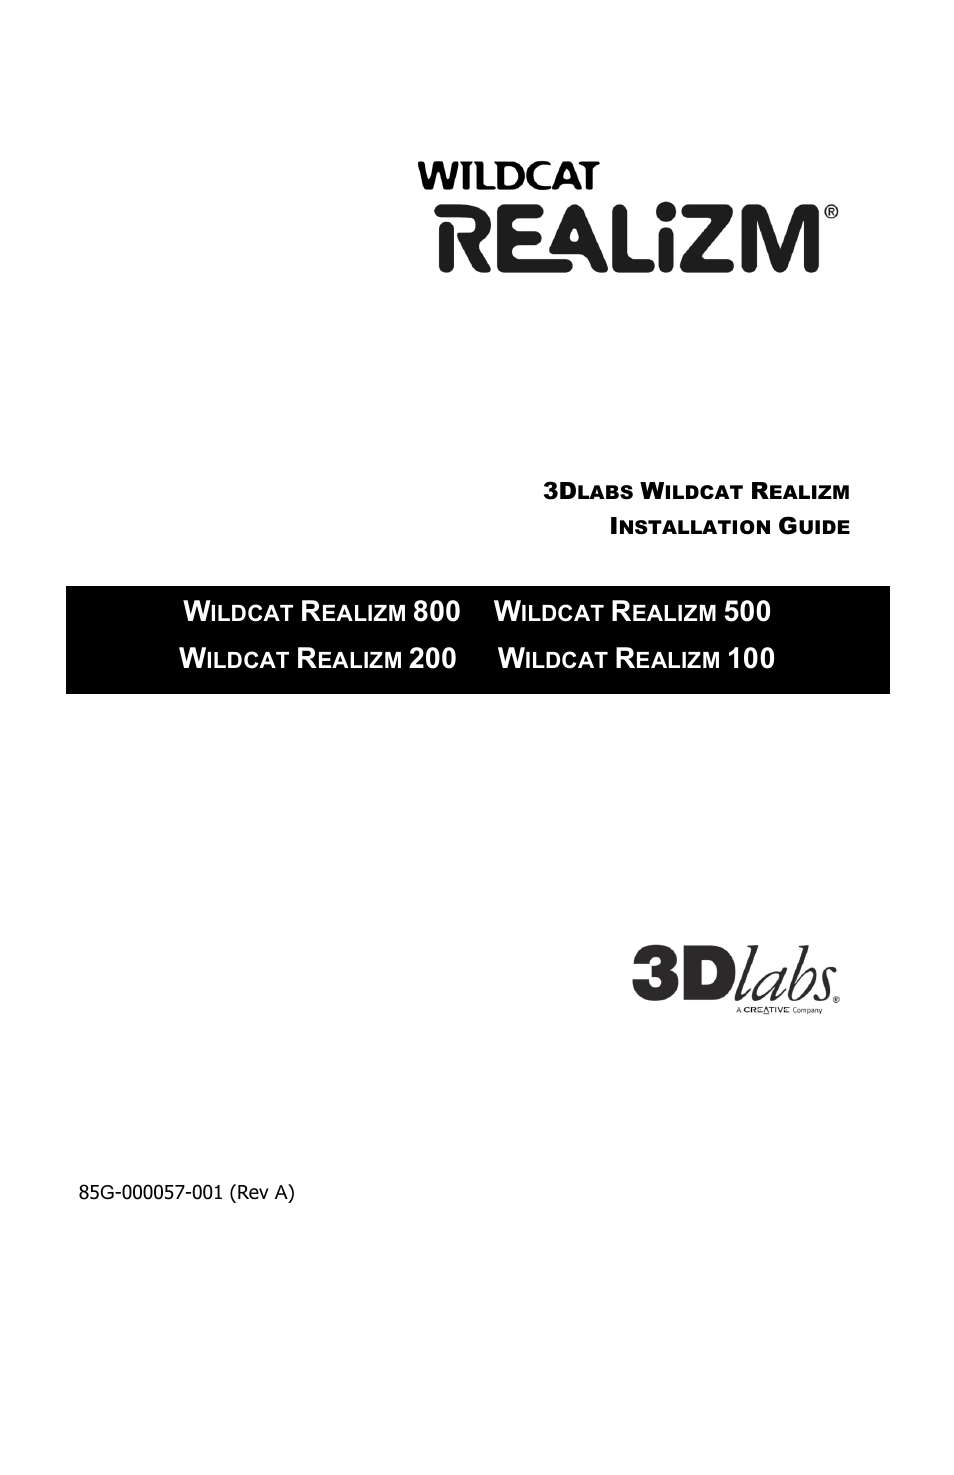 WILDCAT REALIZM 800